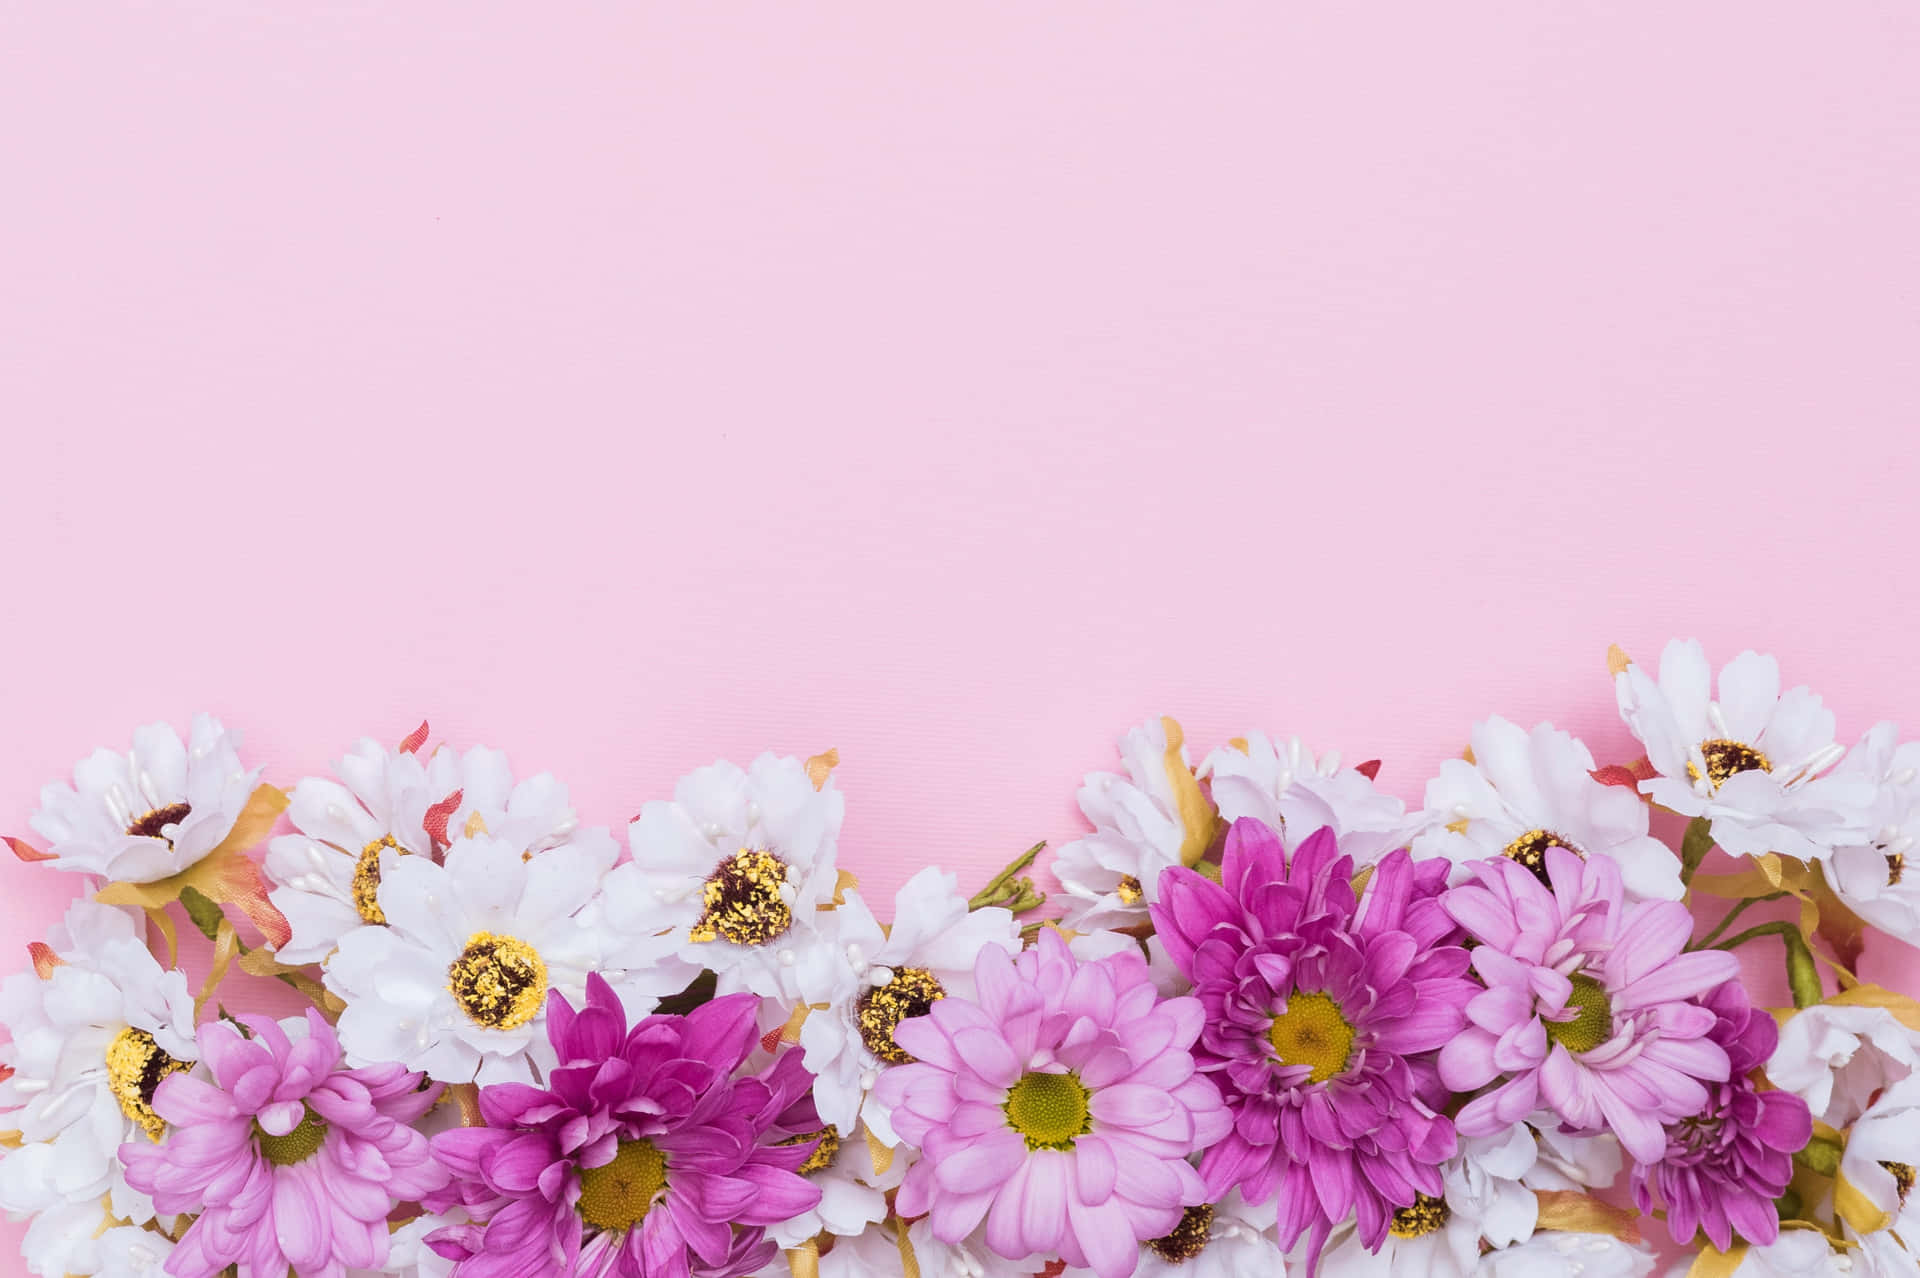 Beautiful Pink Chrysanthemums in Full Bloom Wallpaper